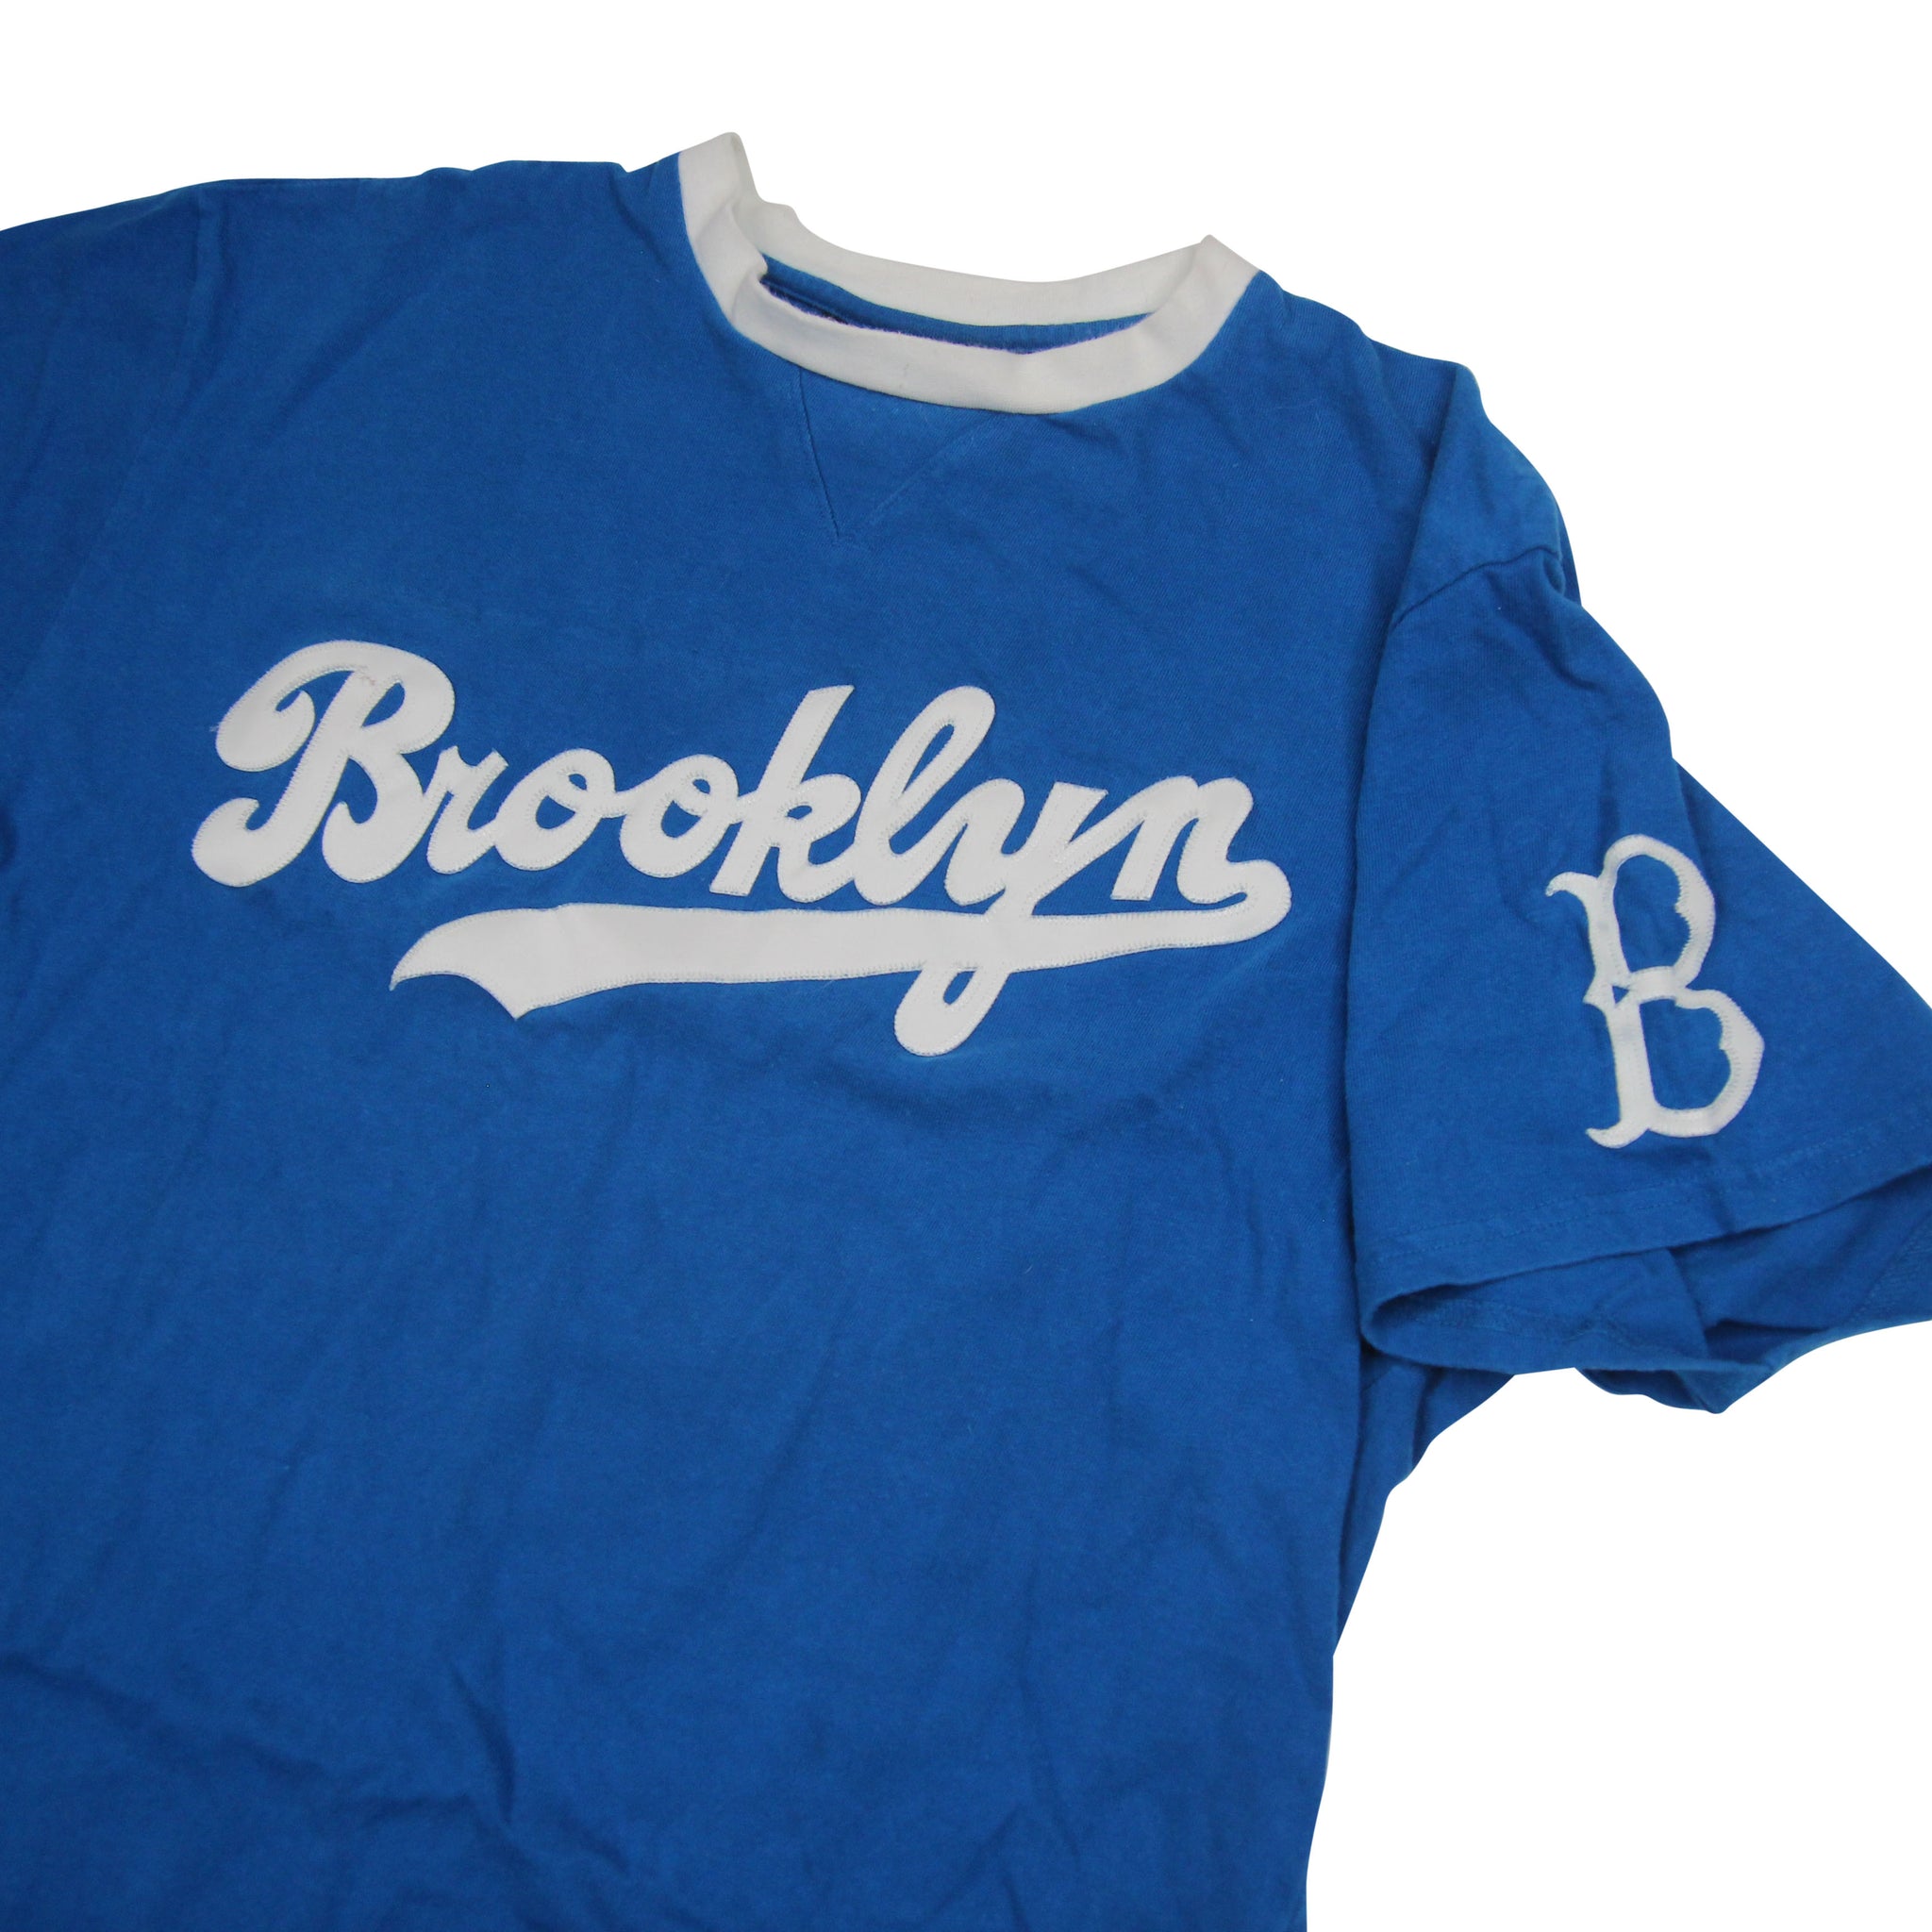 Brooklyn Dodgers Football Apparel Store